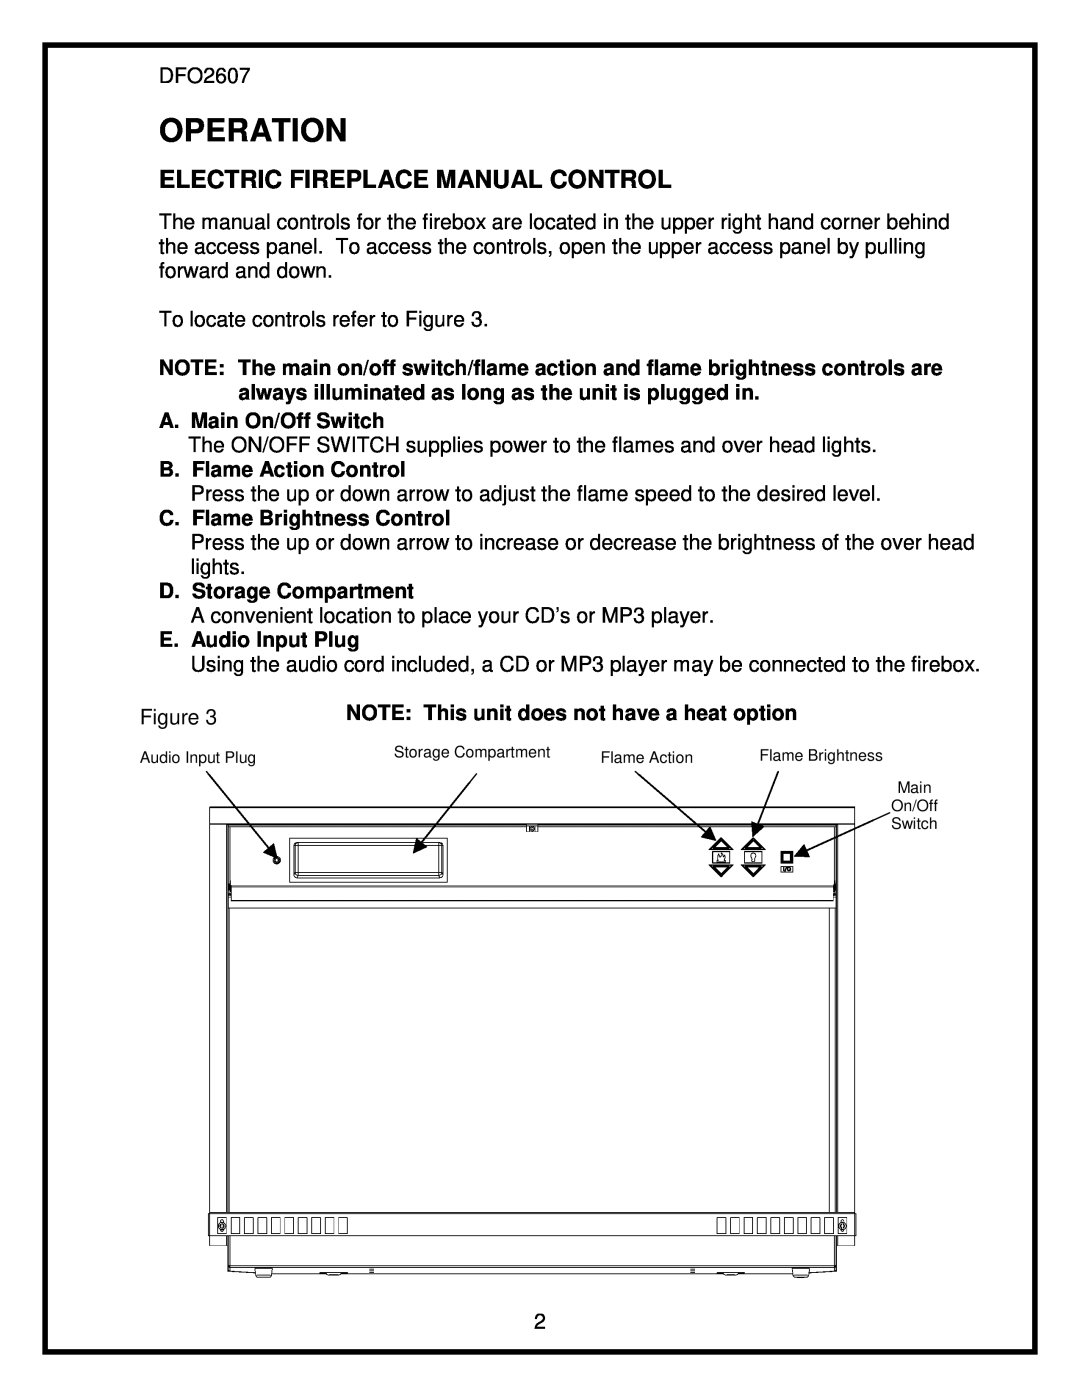 Dimplex 26 service manual Operation, Electric Fireplace Manual Control 